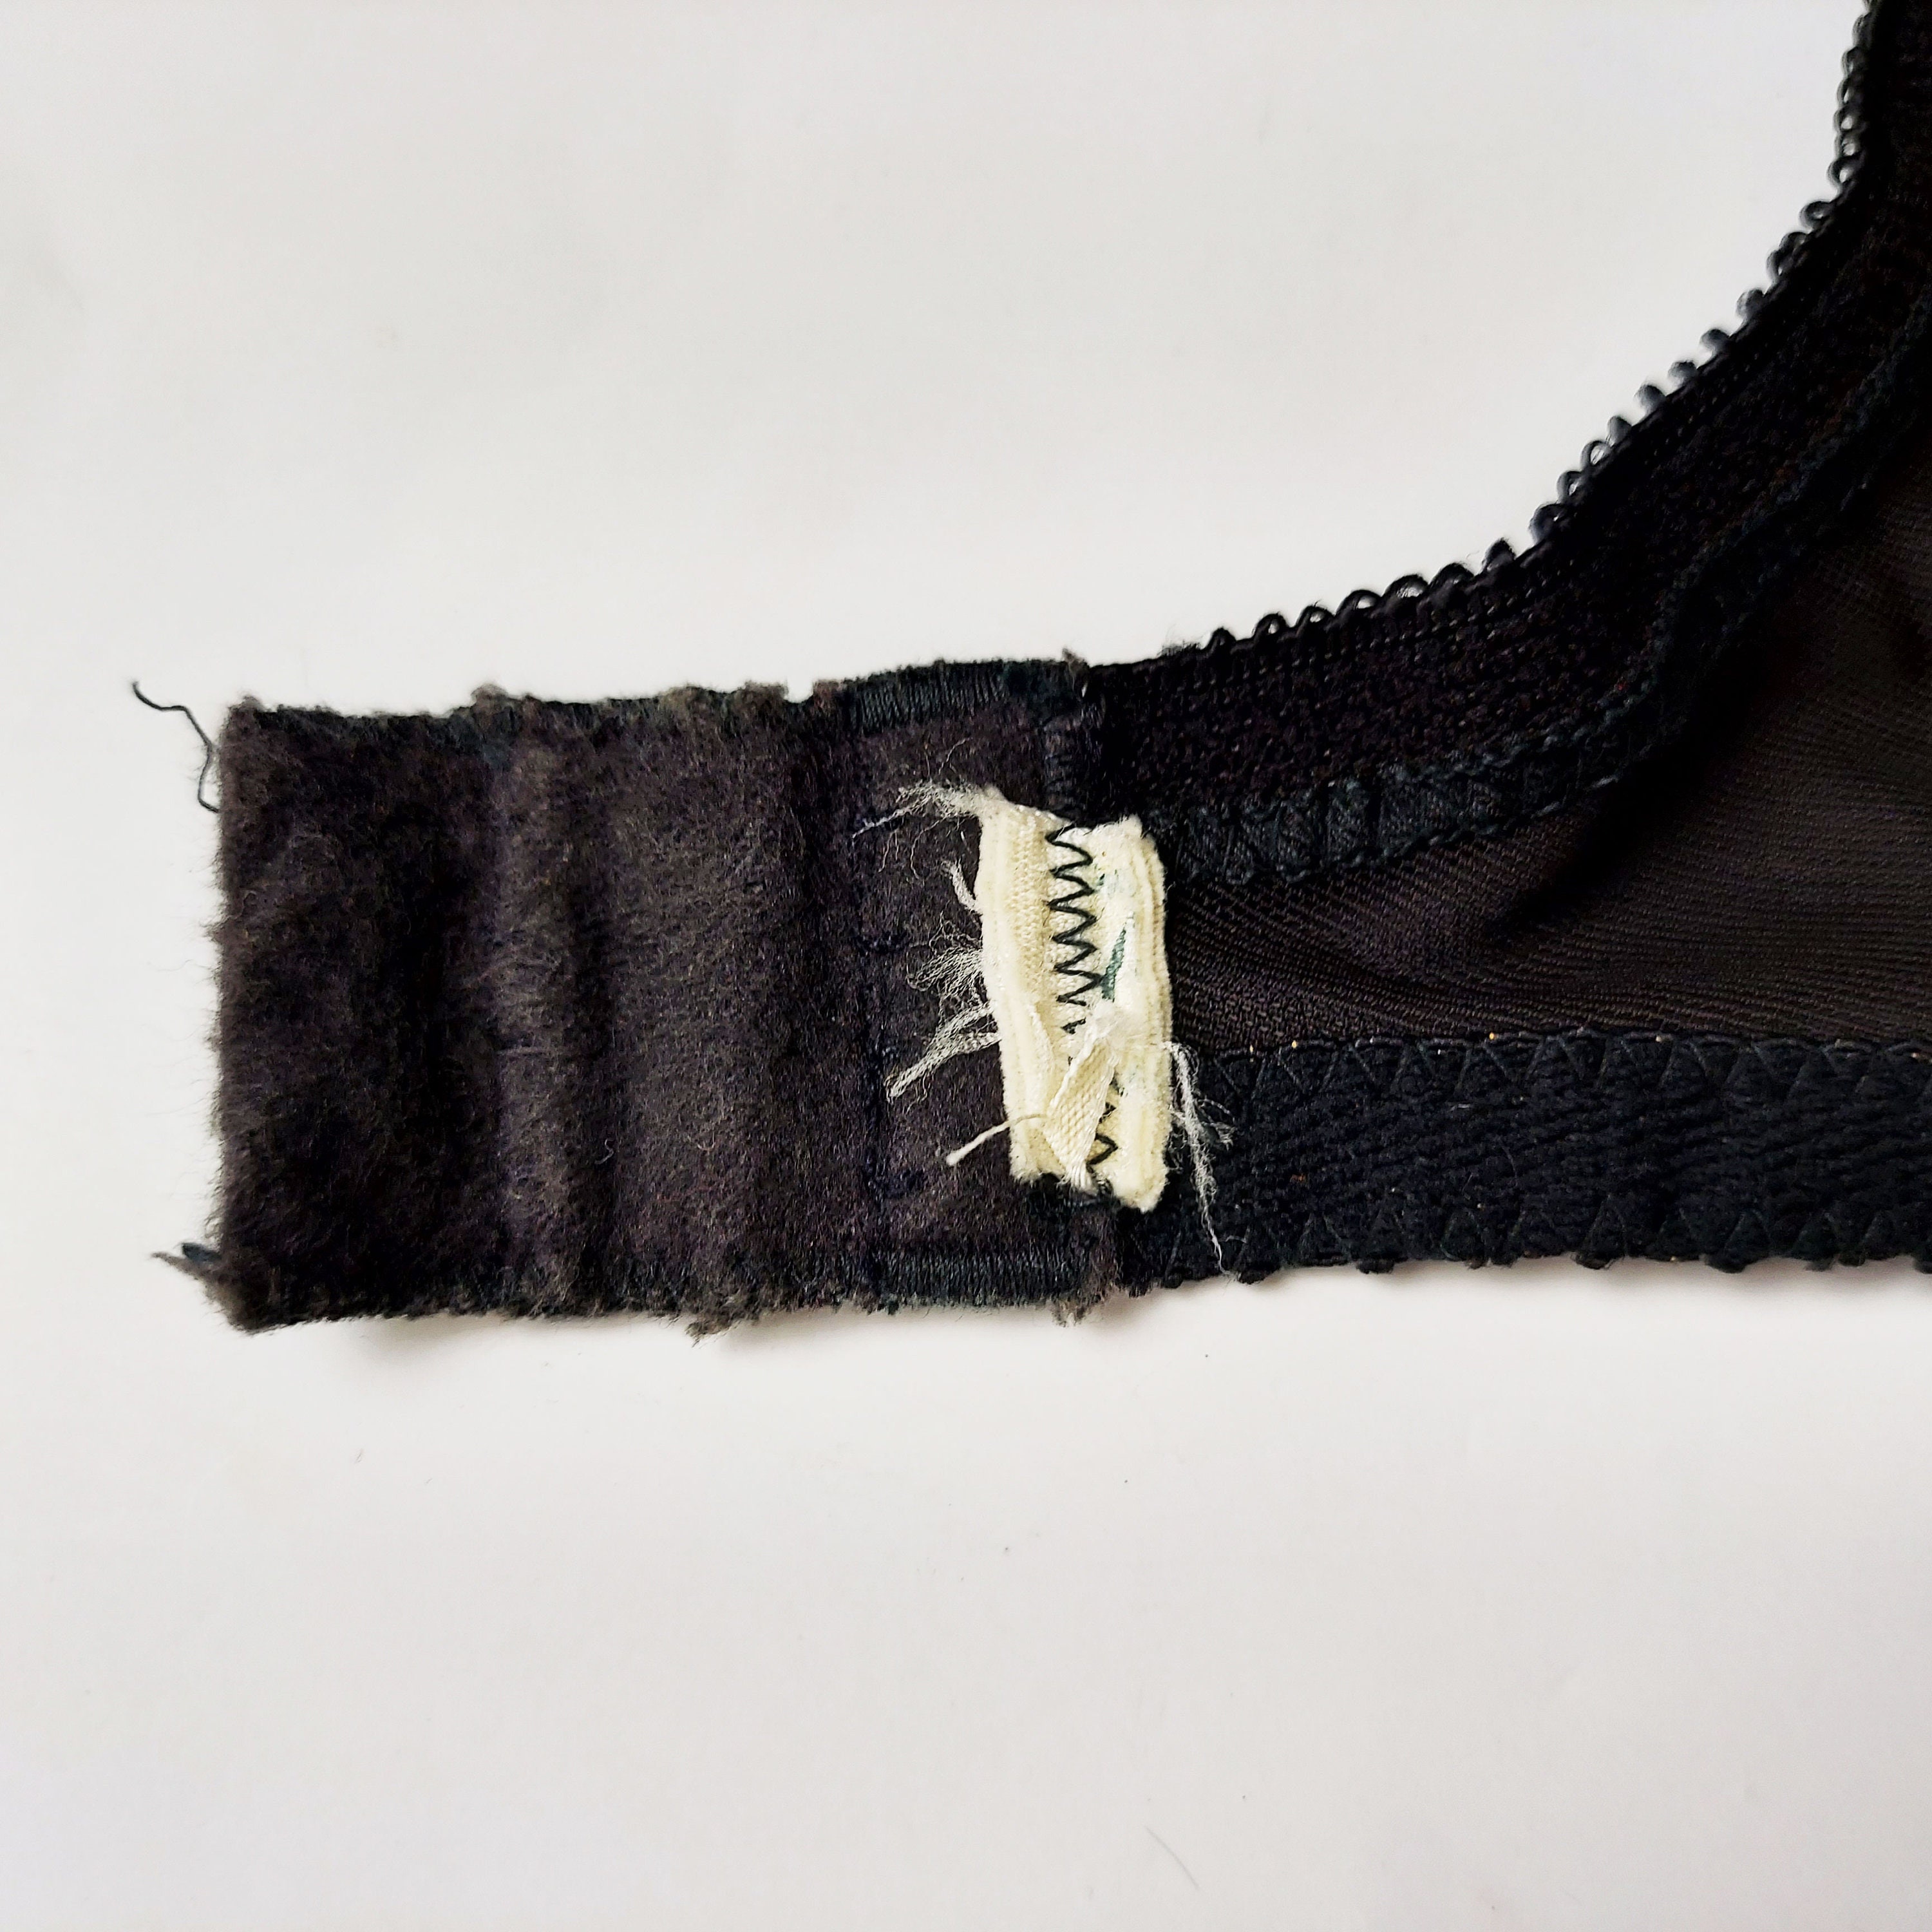 Buy Vintage Black Lace Padded Bra No Underwire Estimated Size 32B